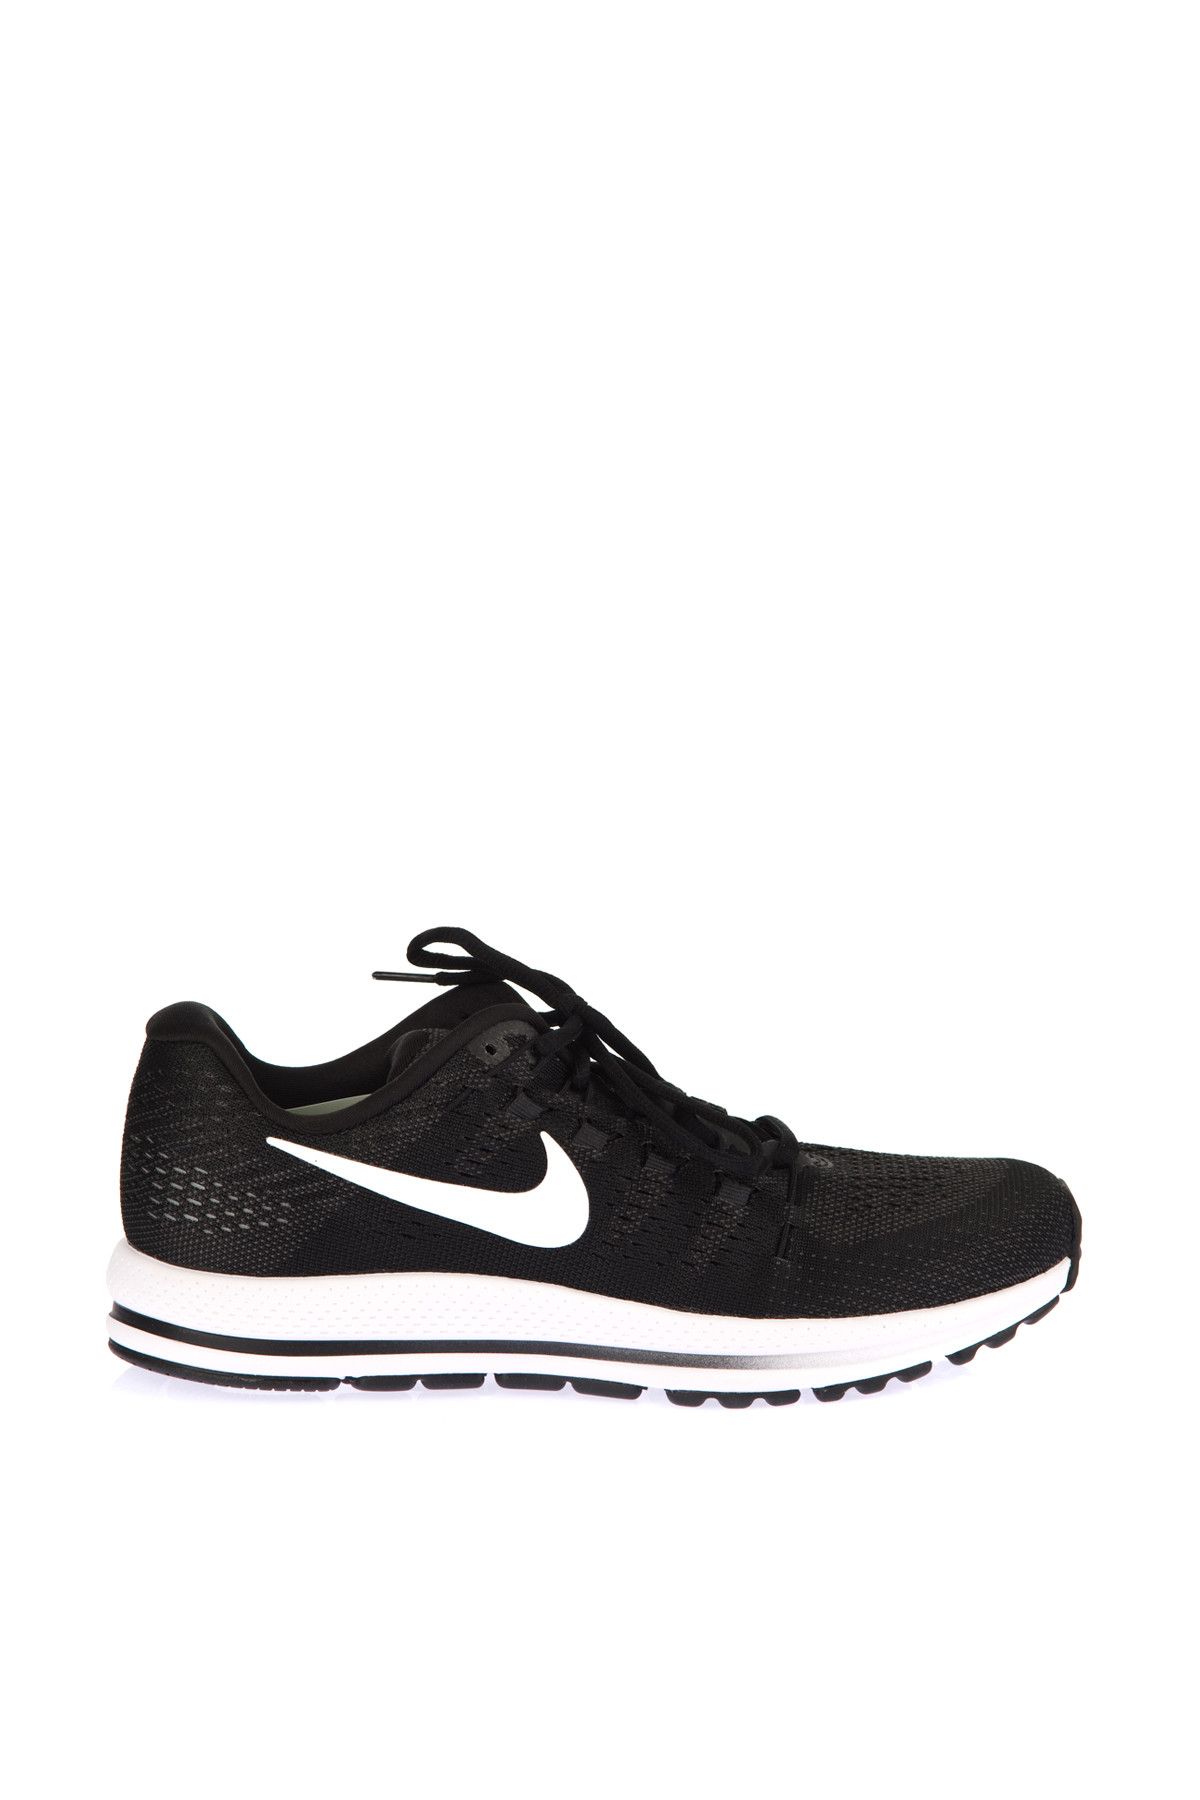 Nike Erkek Koşu Ayakkabı - Air Zoom Vomero 12 - 863762-001